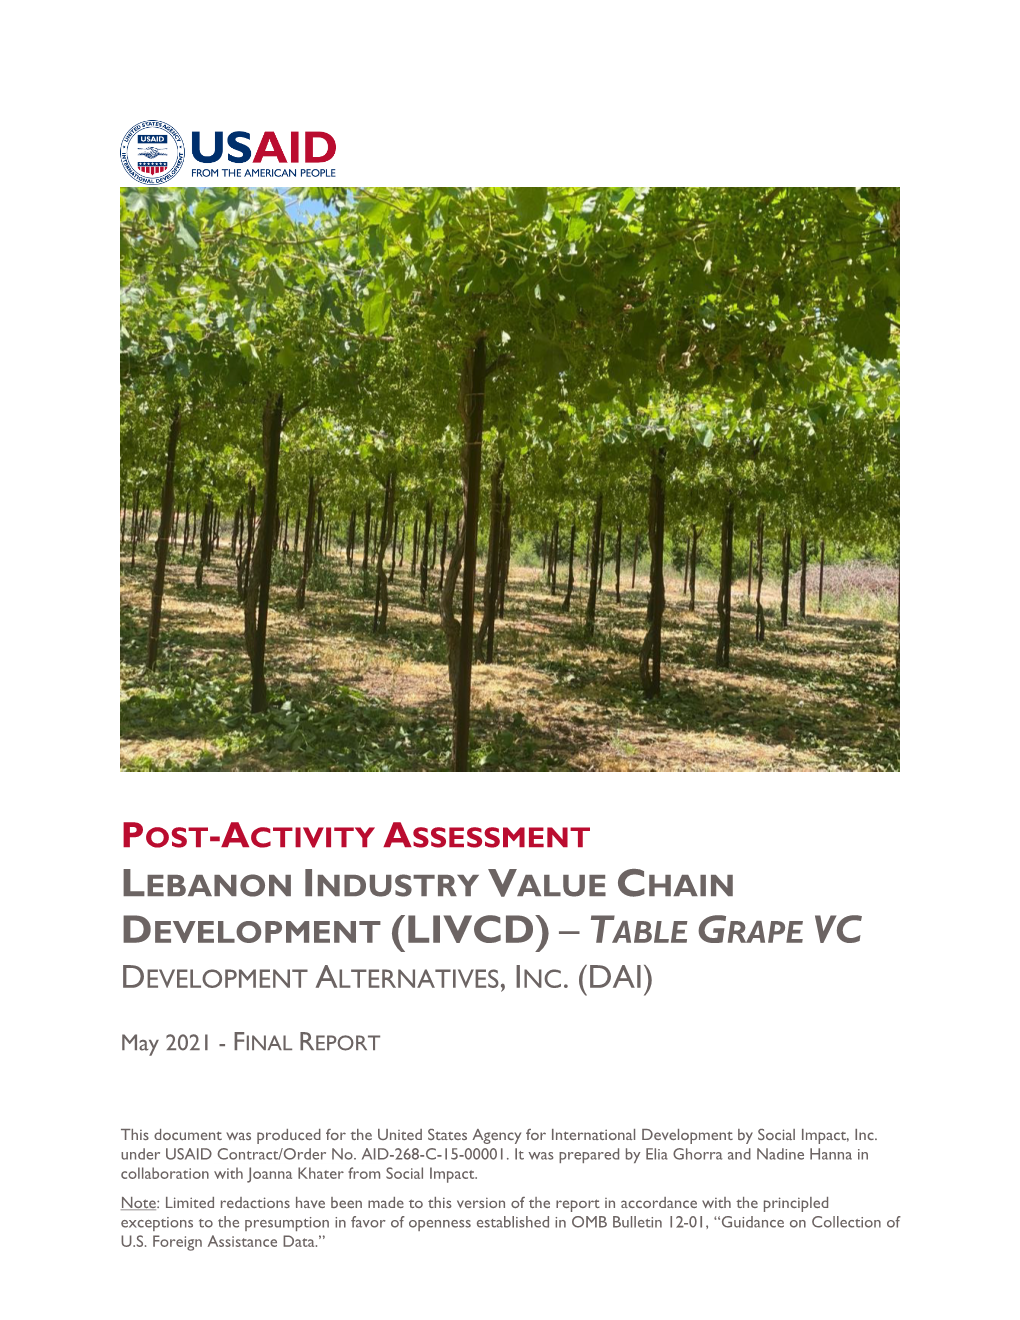 Livcd) – Table Grape Vc Development Alternatives, Inc